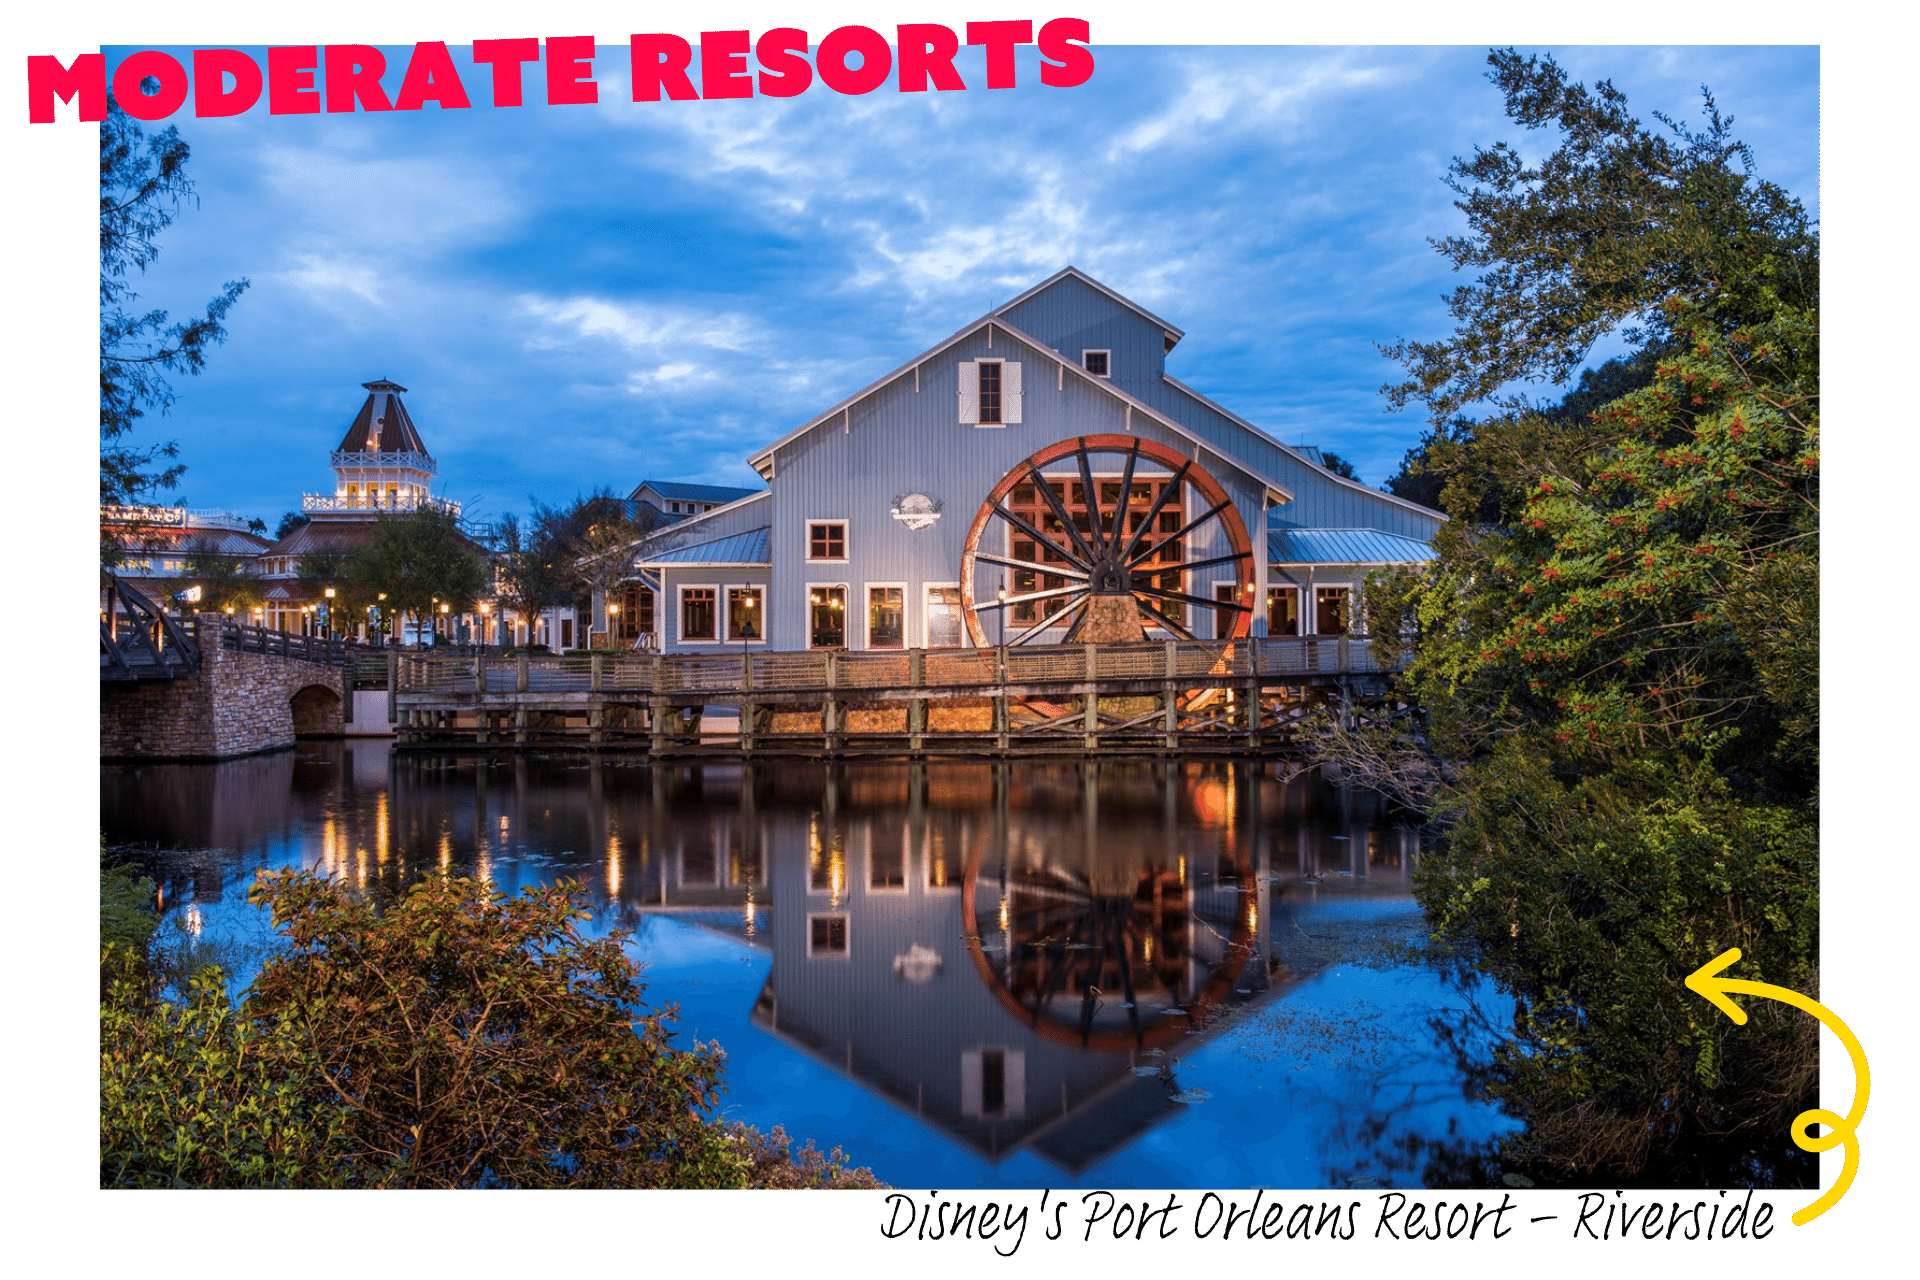 Disney's Port Orleans Resort - Riverside is one of the Moderate Disney Resorts at Walt Disney World Resort, Florida.